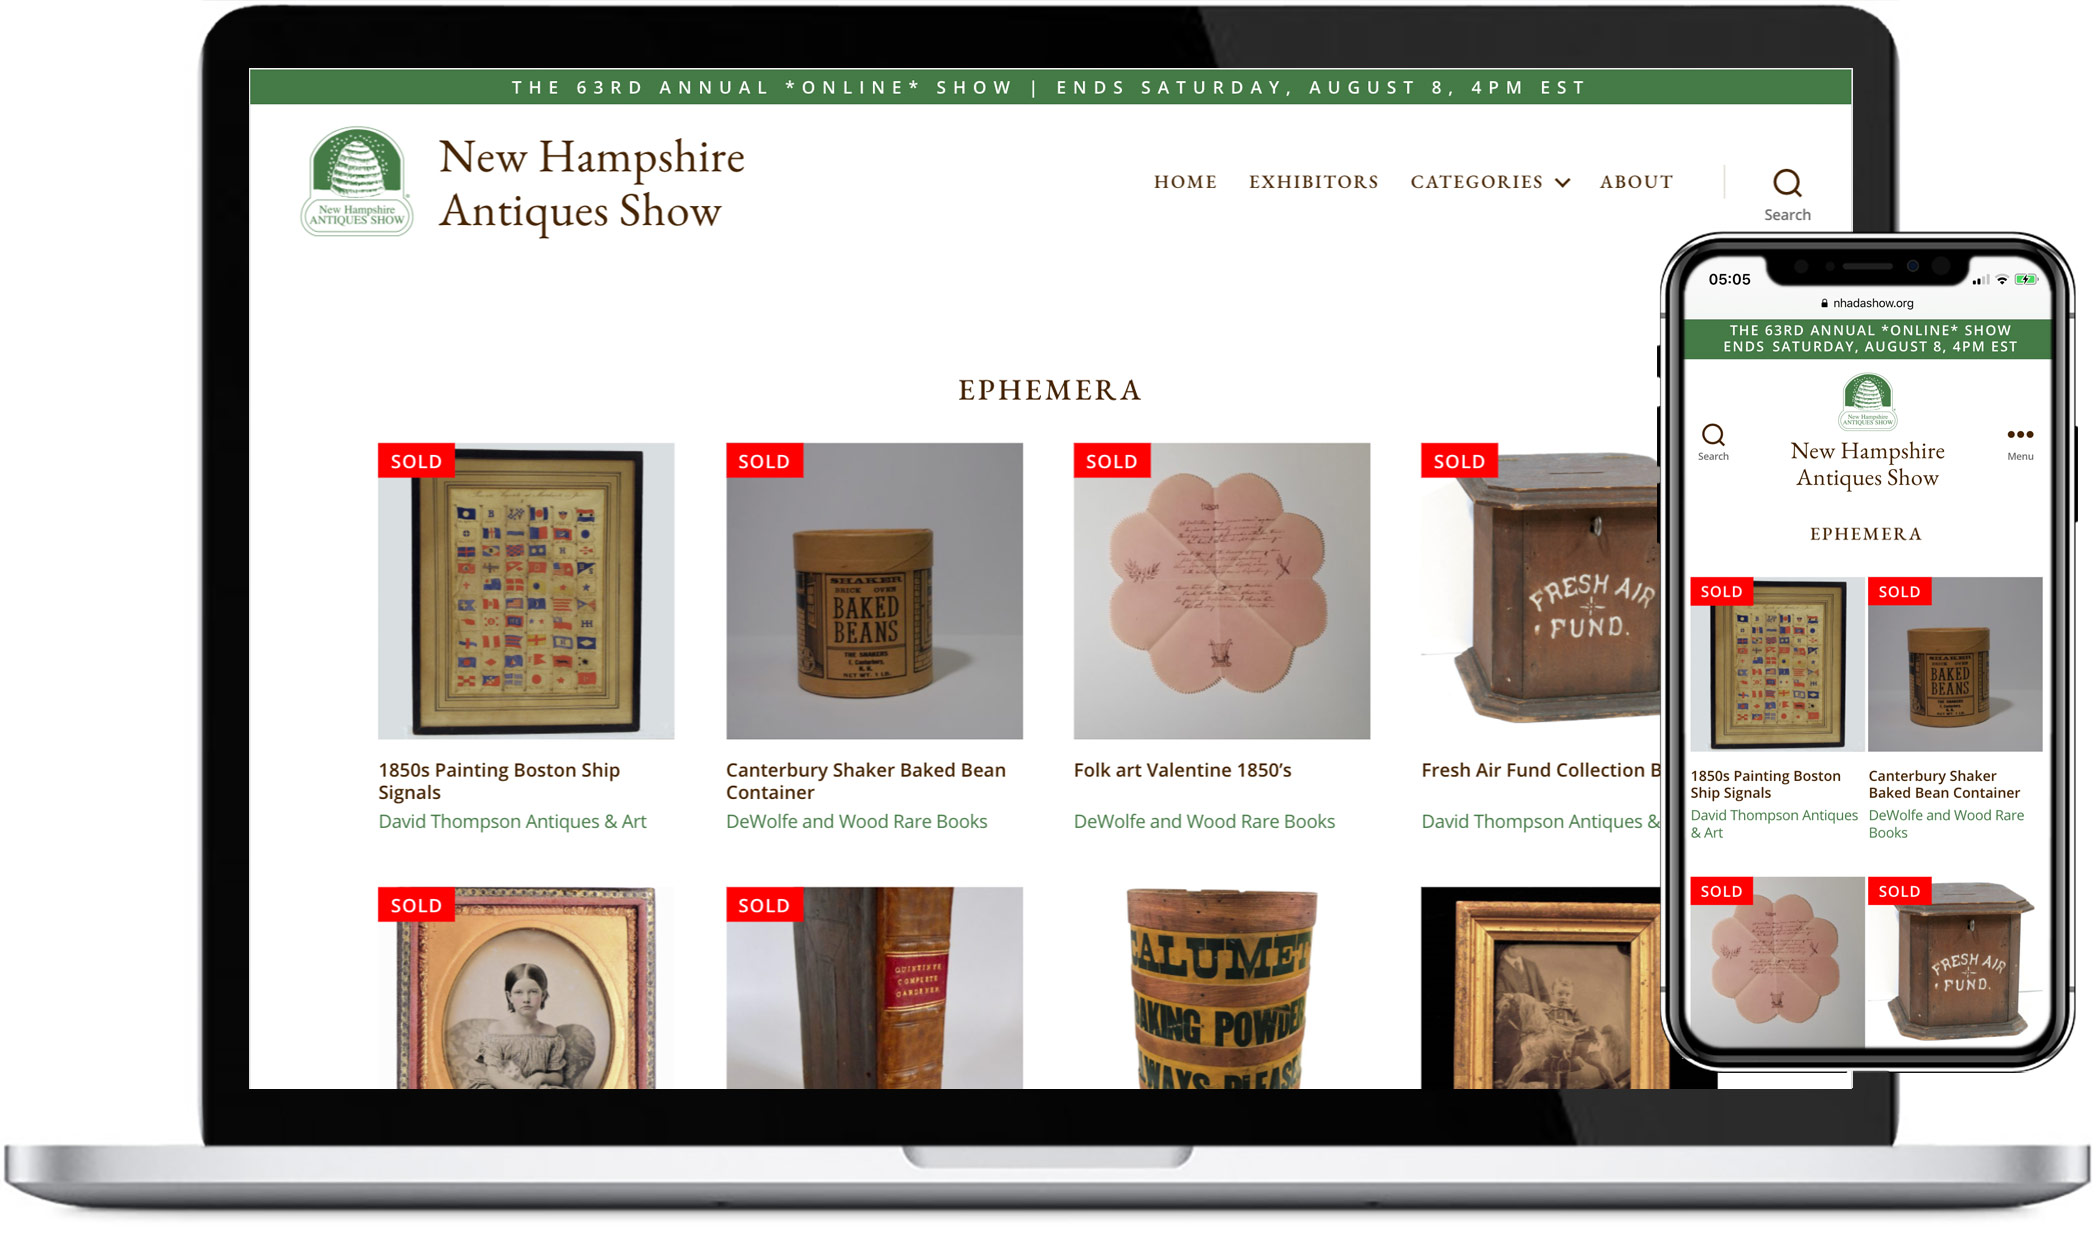 New Hampshire Antiques Show - Ephemera Page